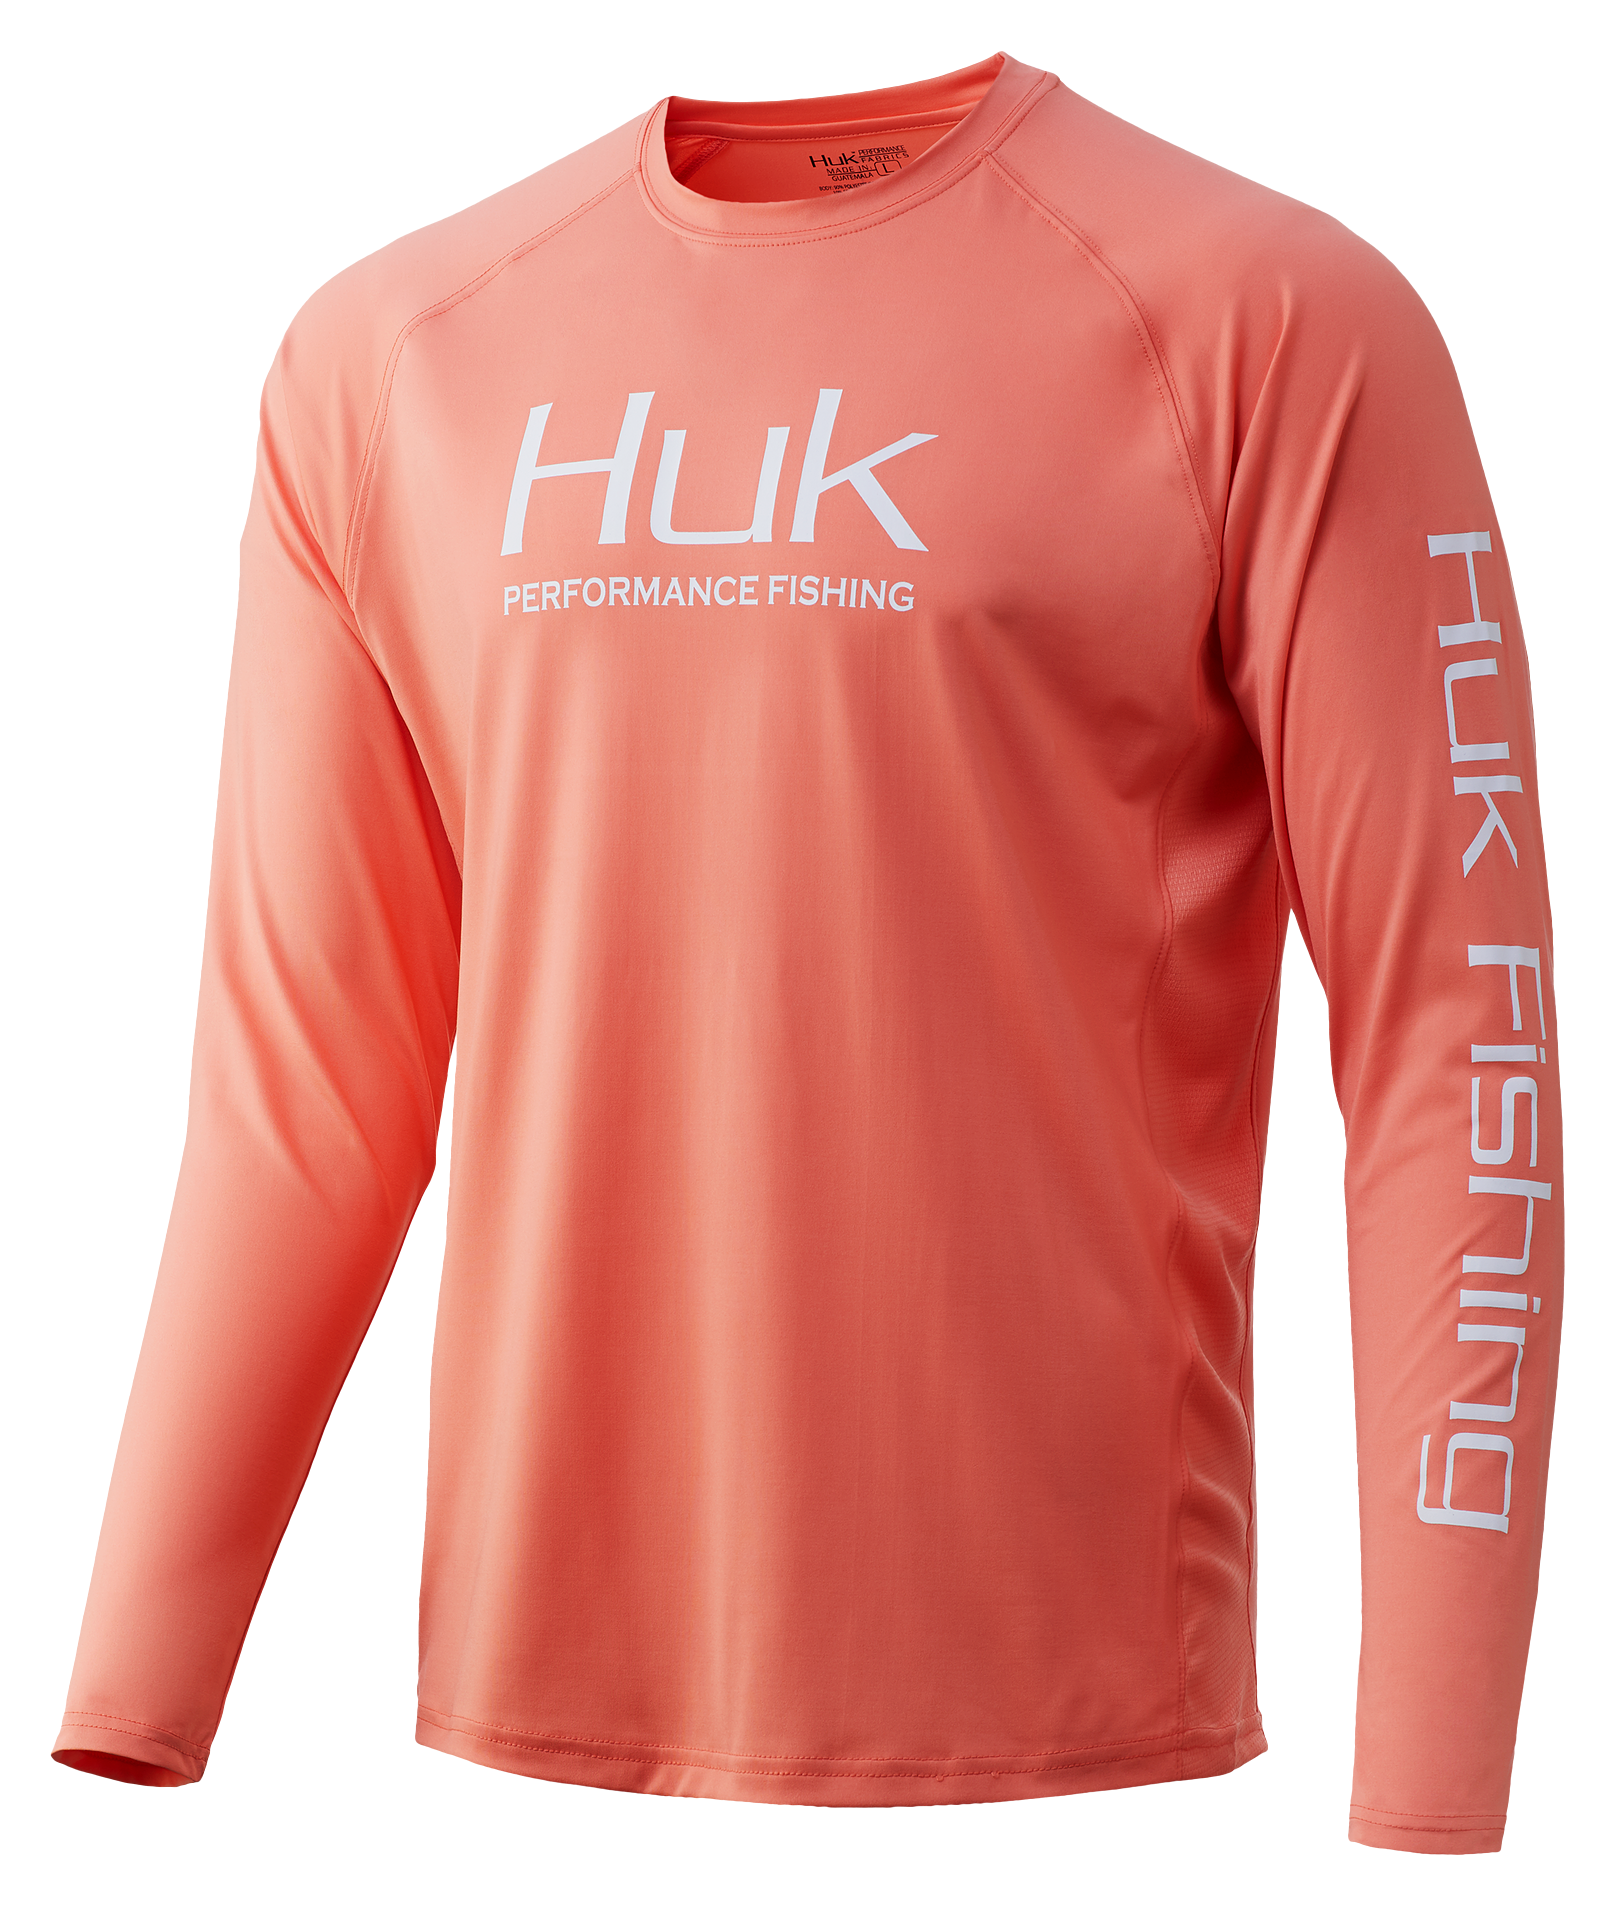 Huk Pursuit Vented Fishing Long-Sleeve Shirt for Men